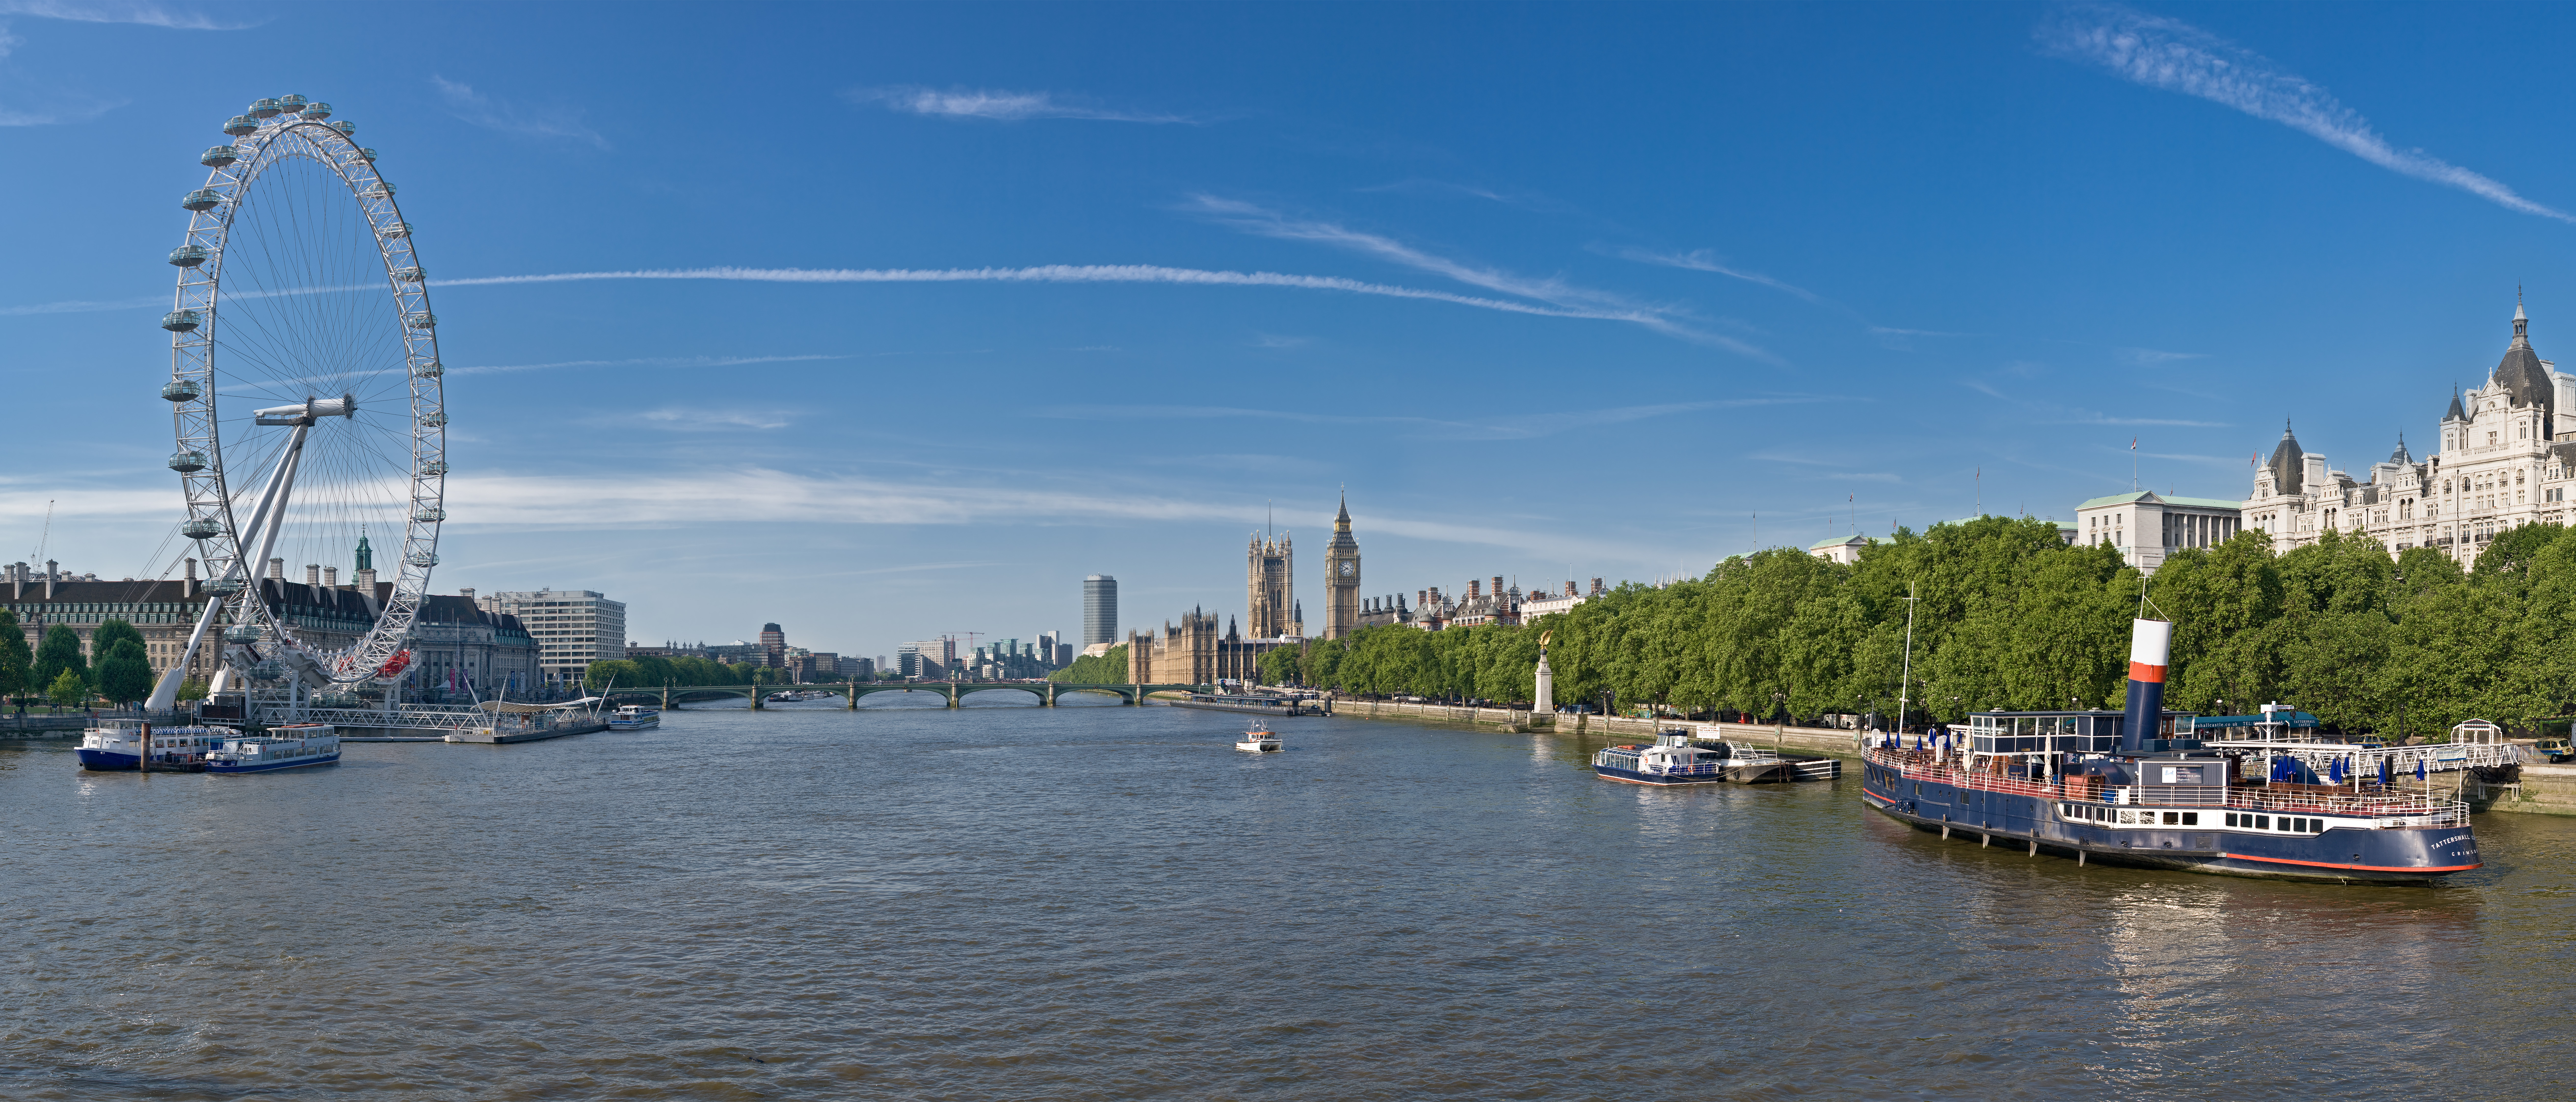 File:Thames Panorama, London - June 2009.jpg - Wikimedia Commons